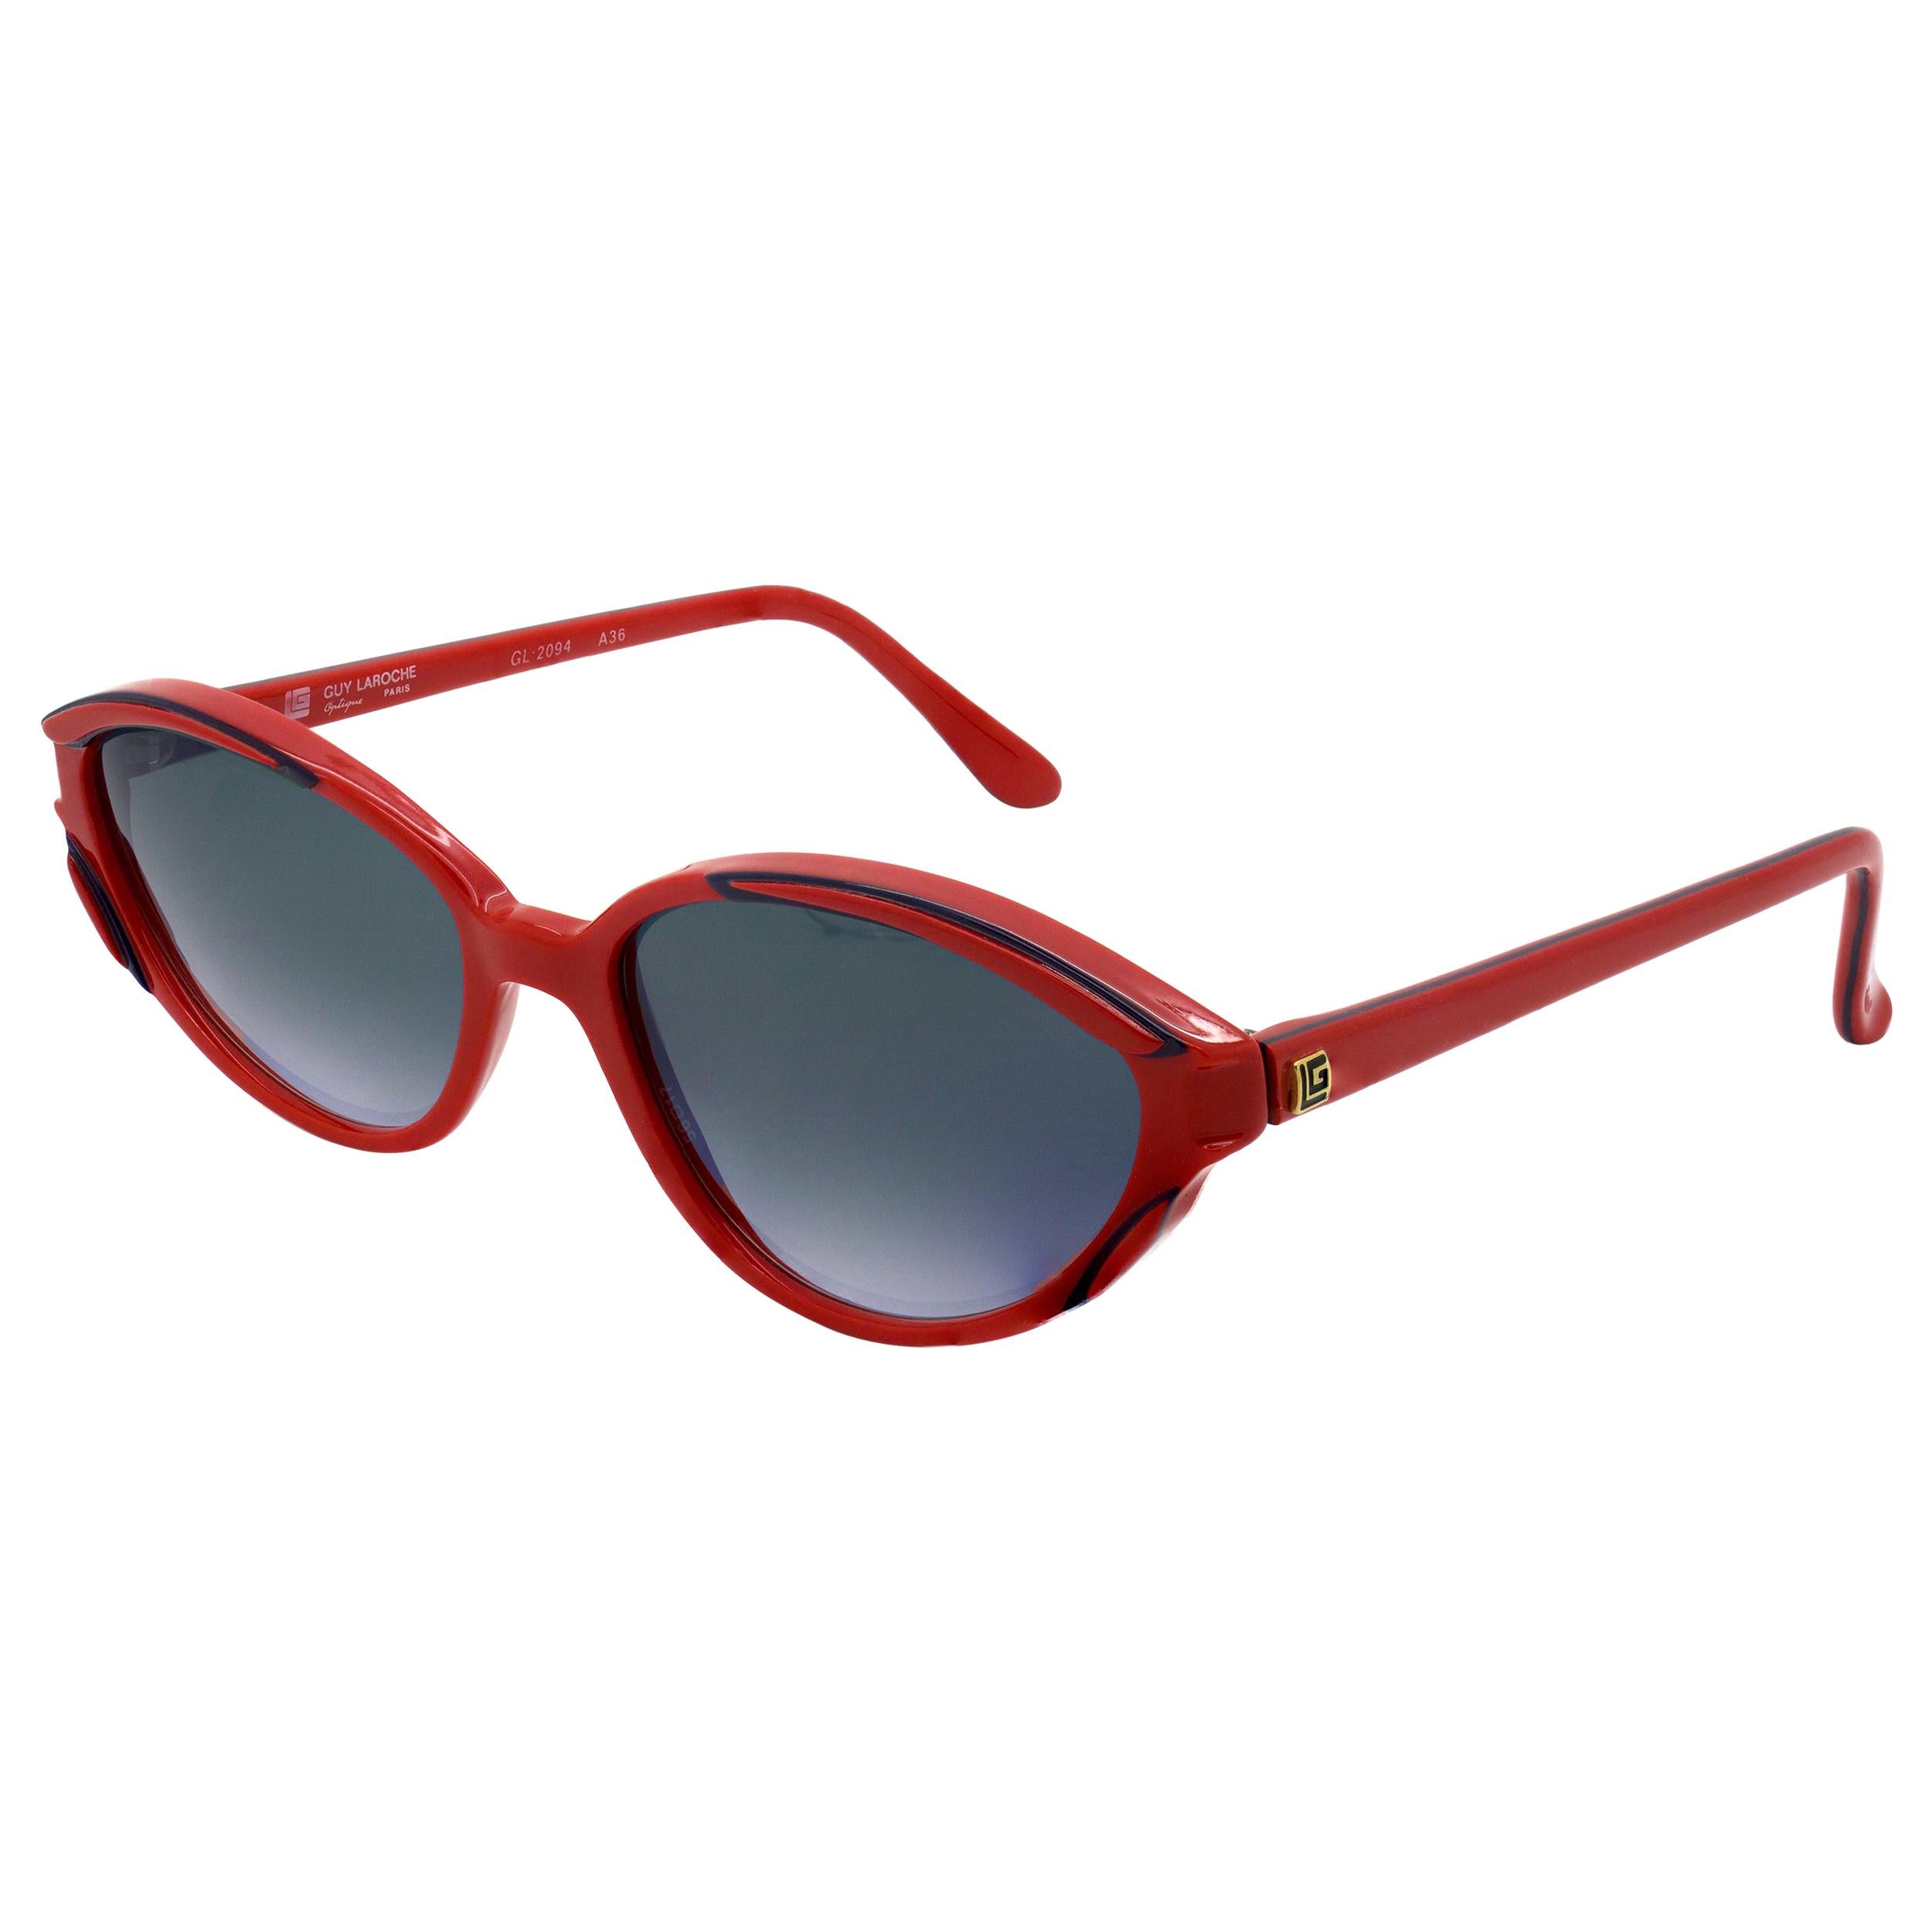 Guy Laroche 80s vintage sunglasses For Sale